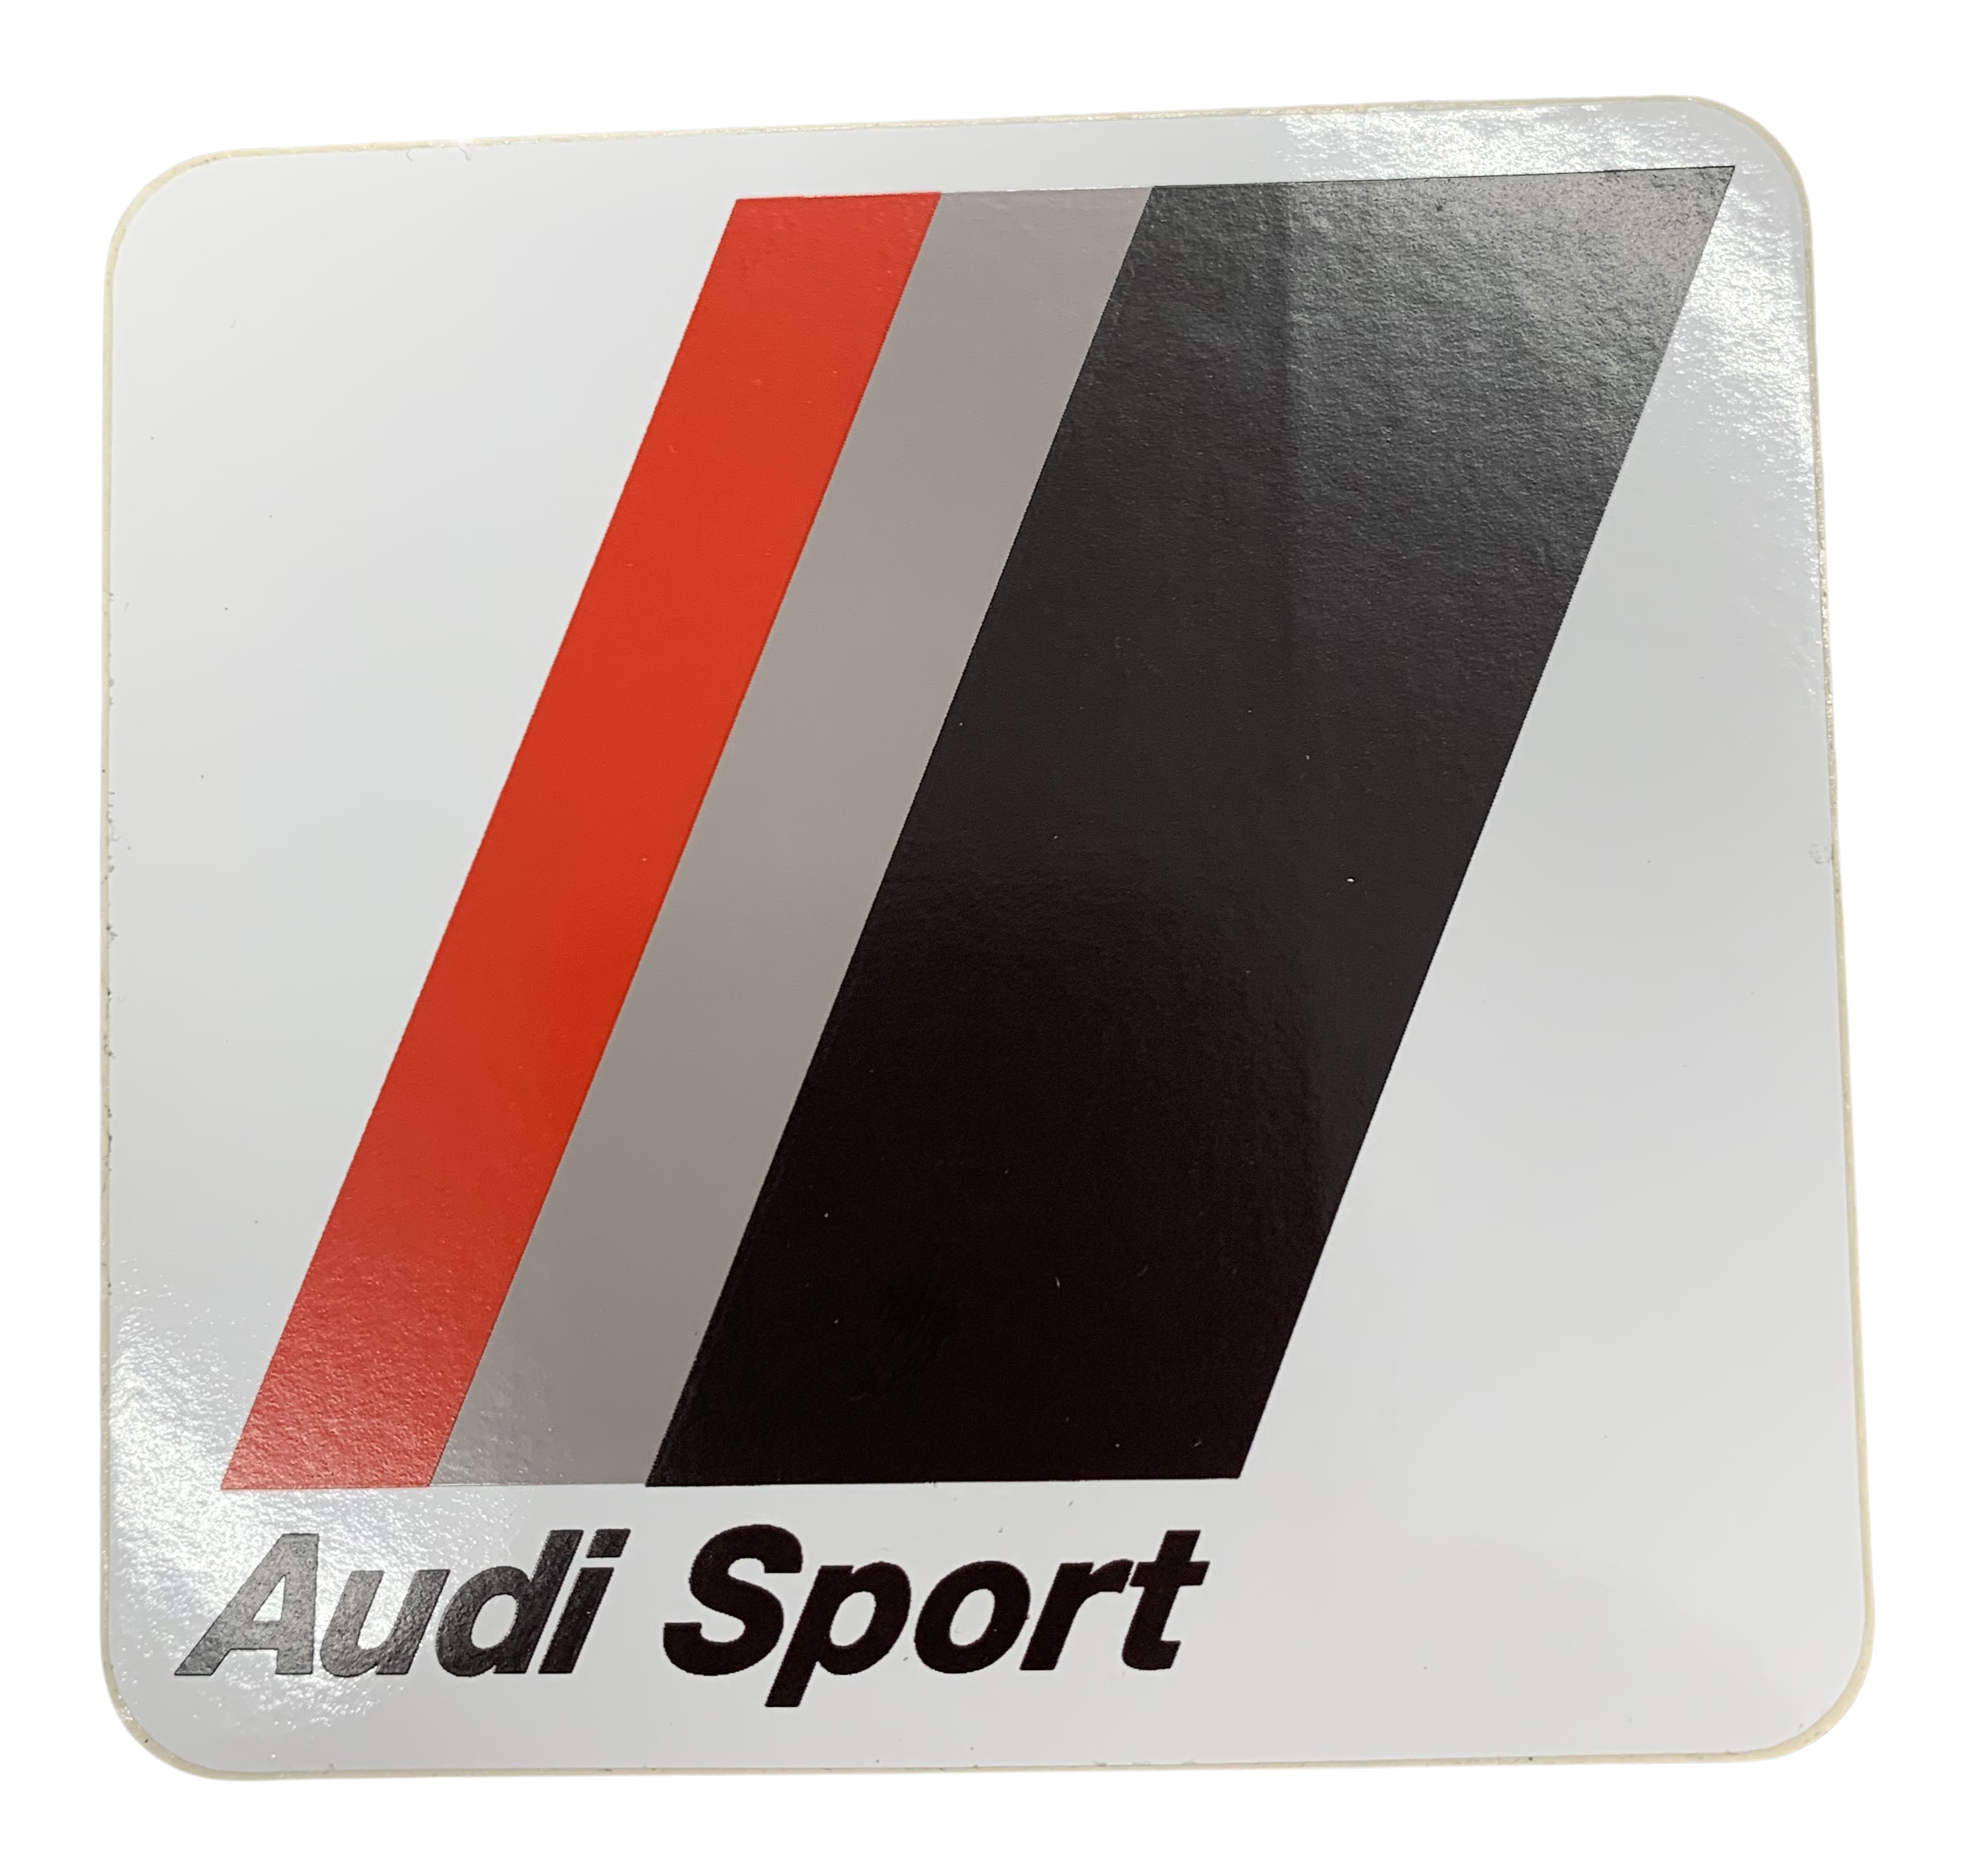 https://bilder.afterbuy.de/images/53074/Original_Audi_Sport_Aufkleber.jpg